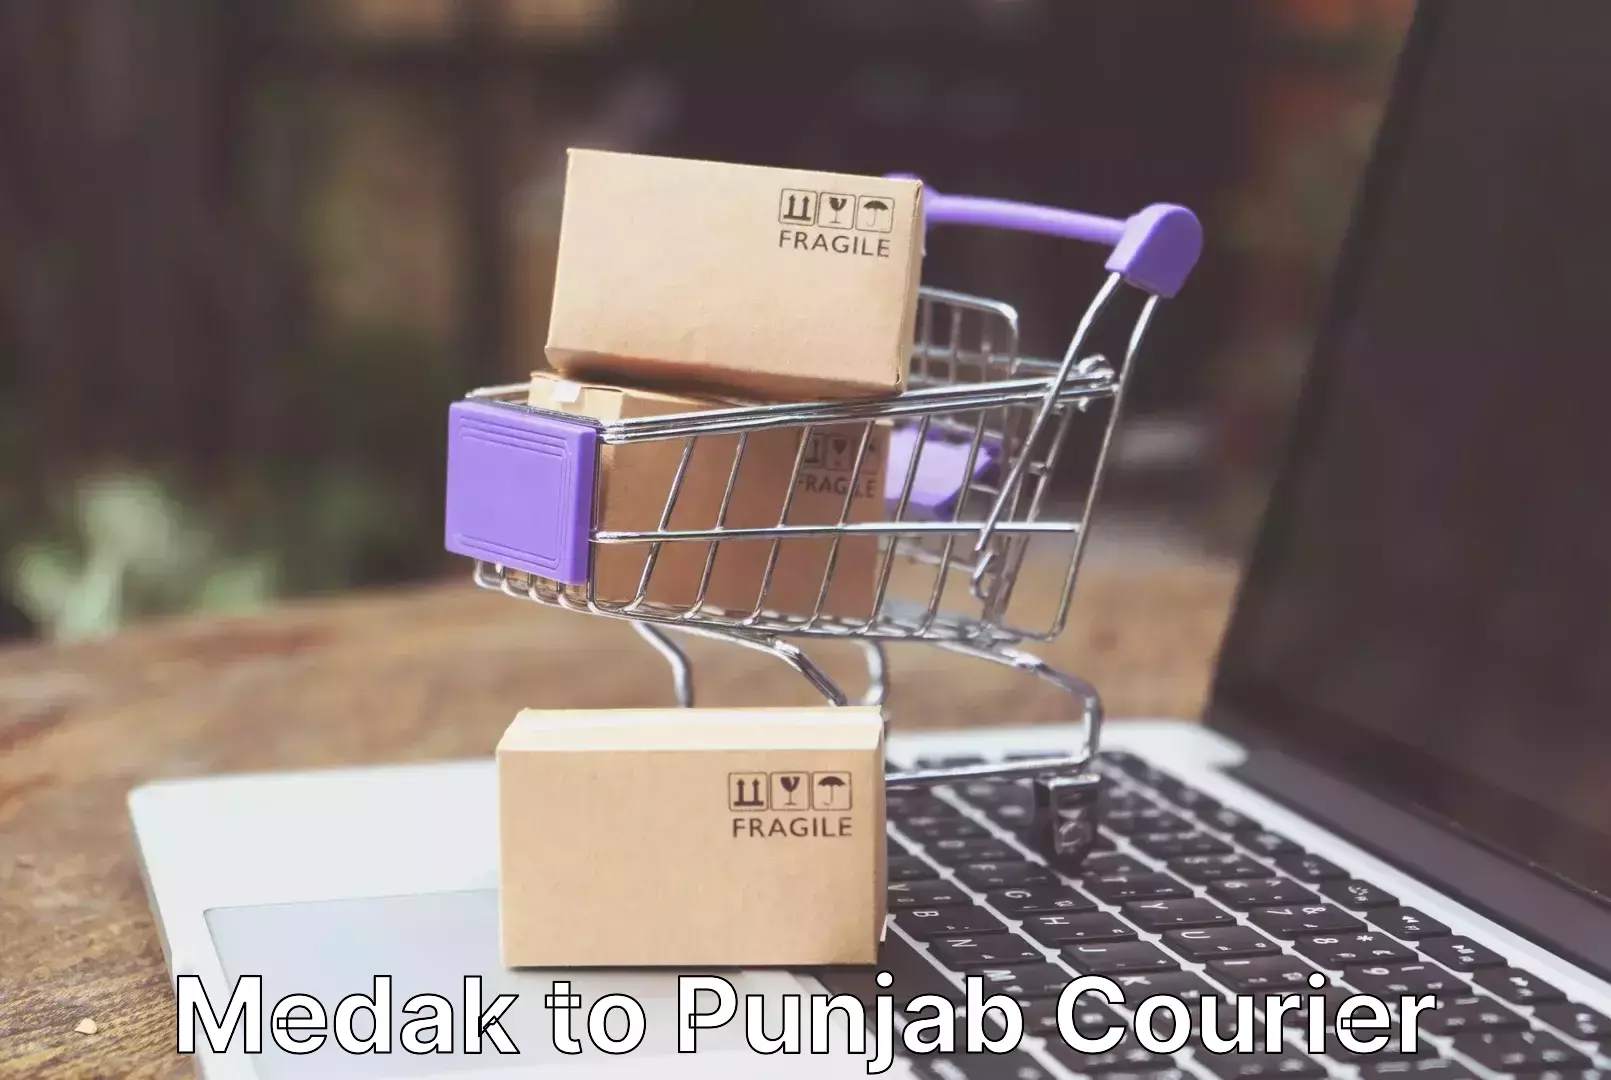 Furniture relocation experts Medak to Punjab